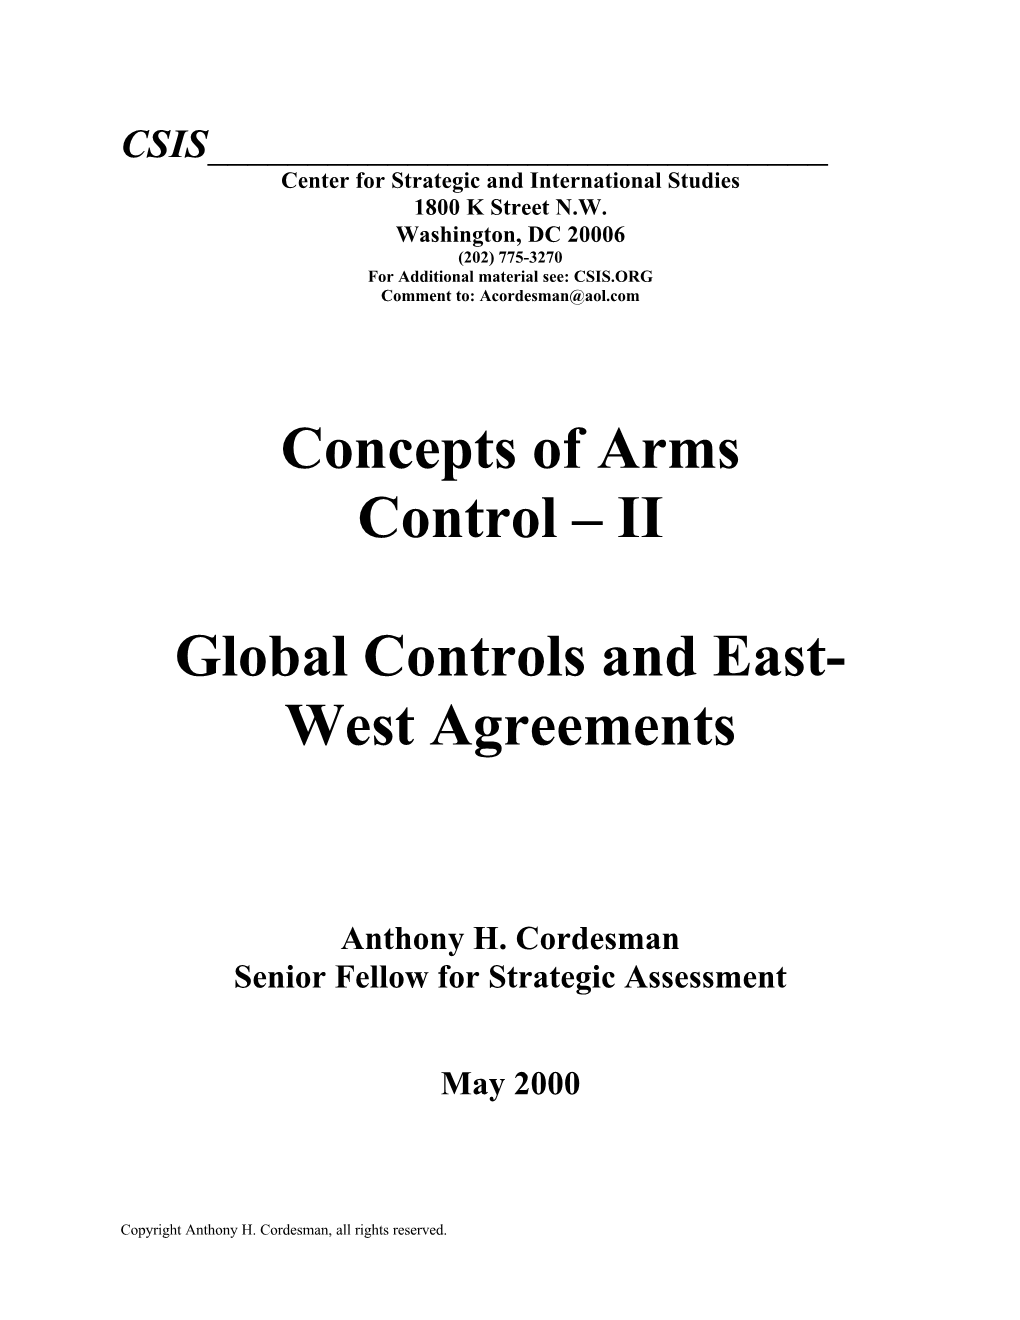 Arms Control – II